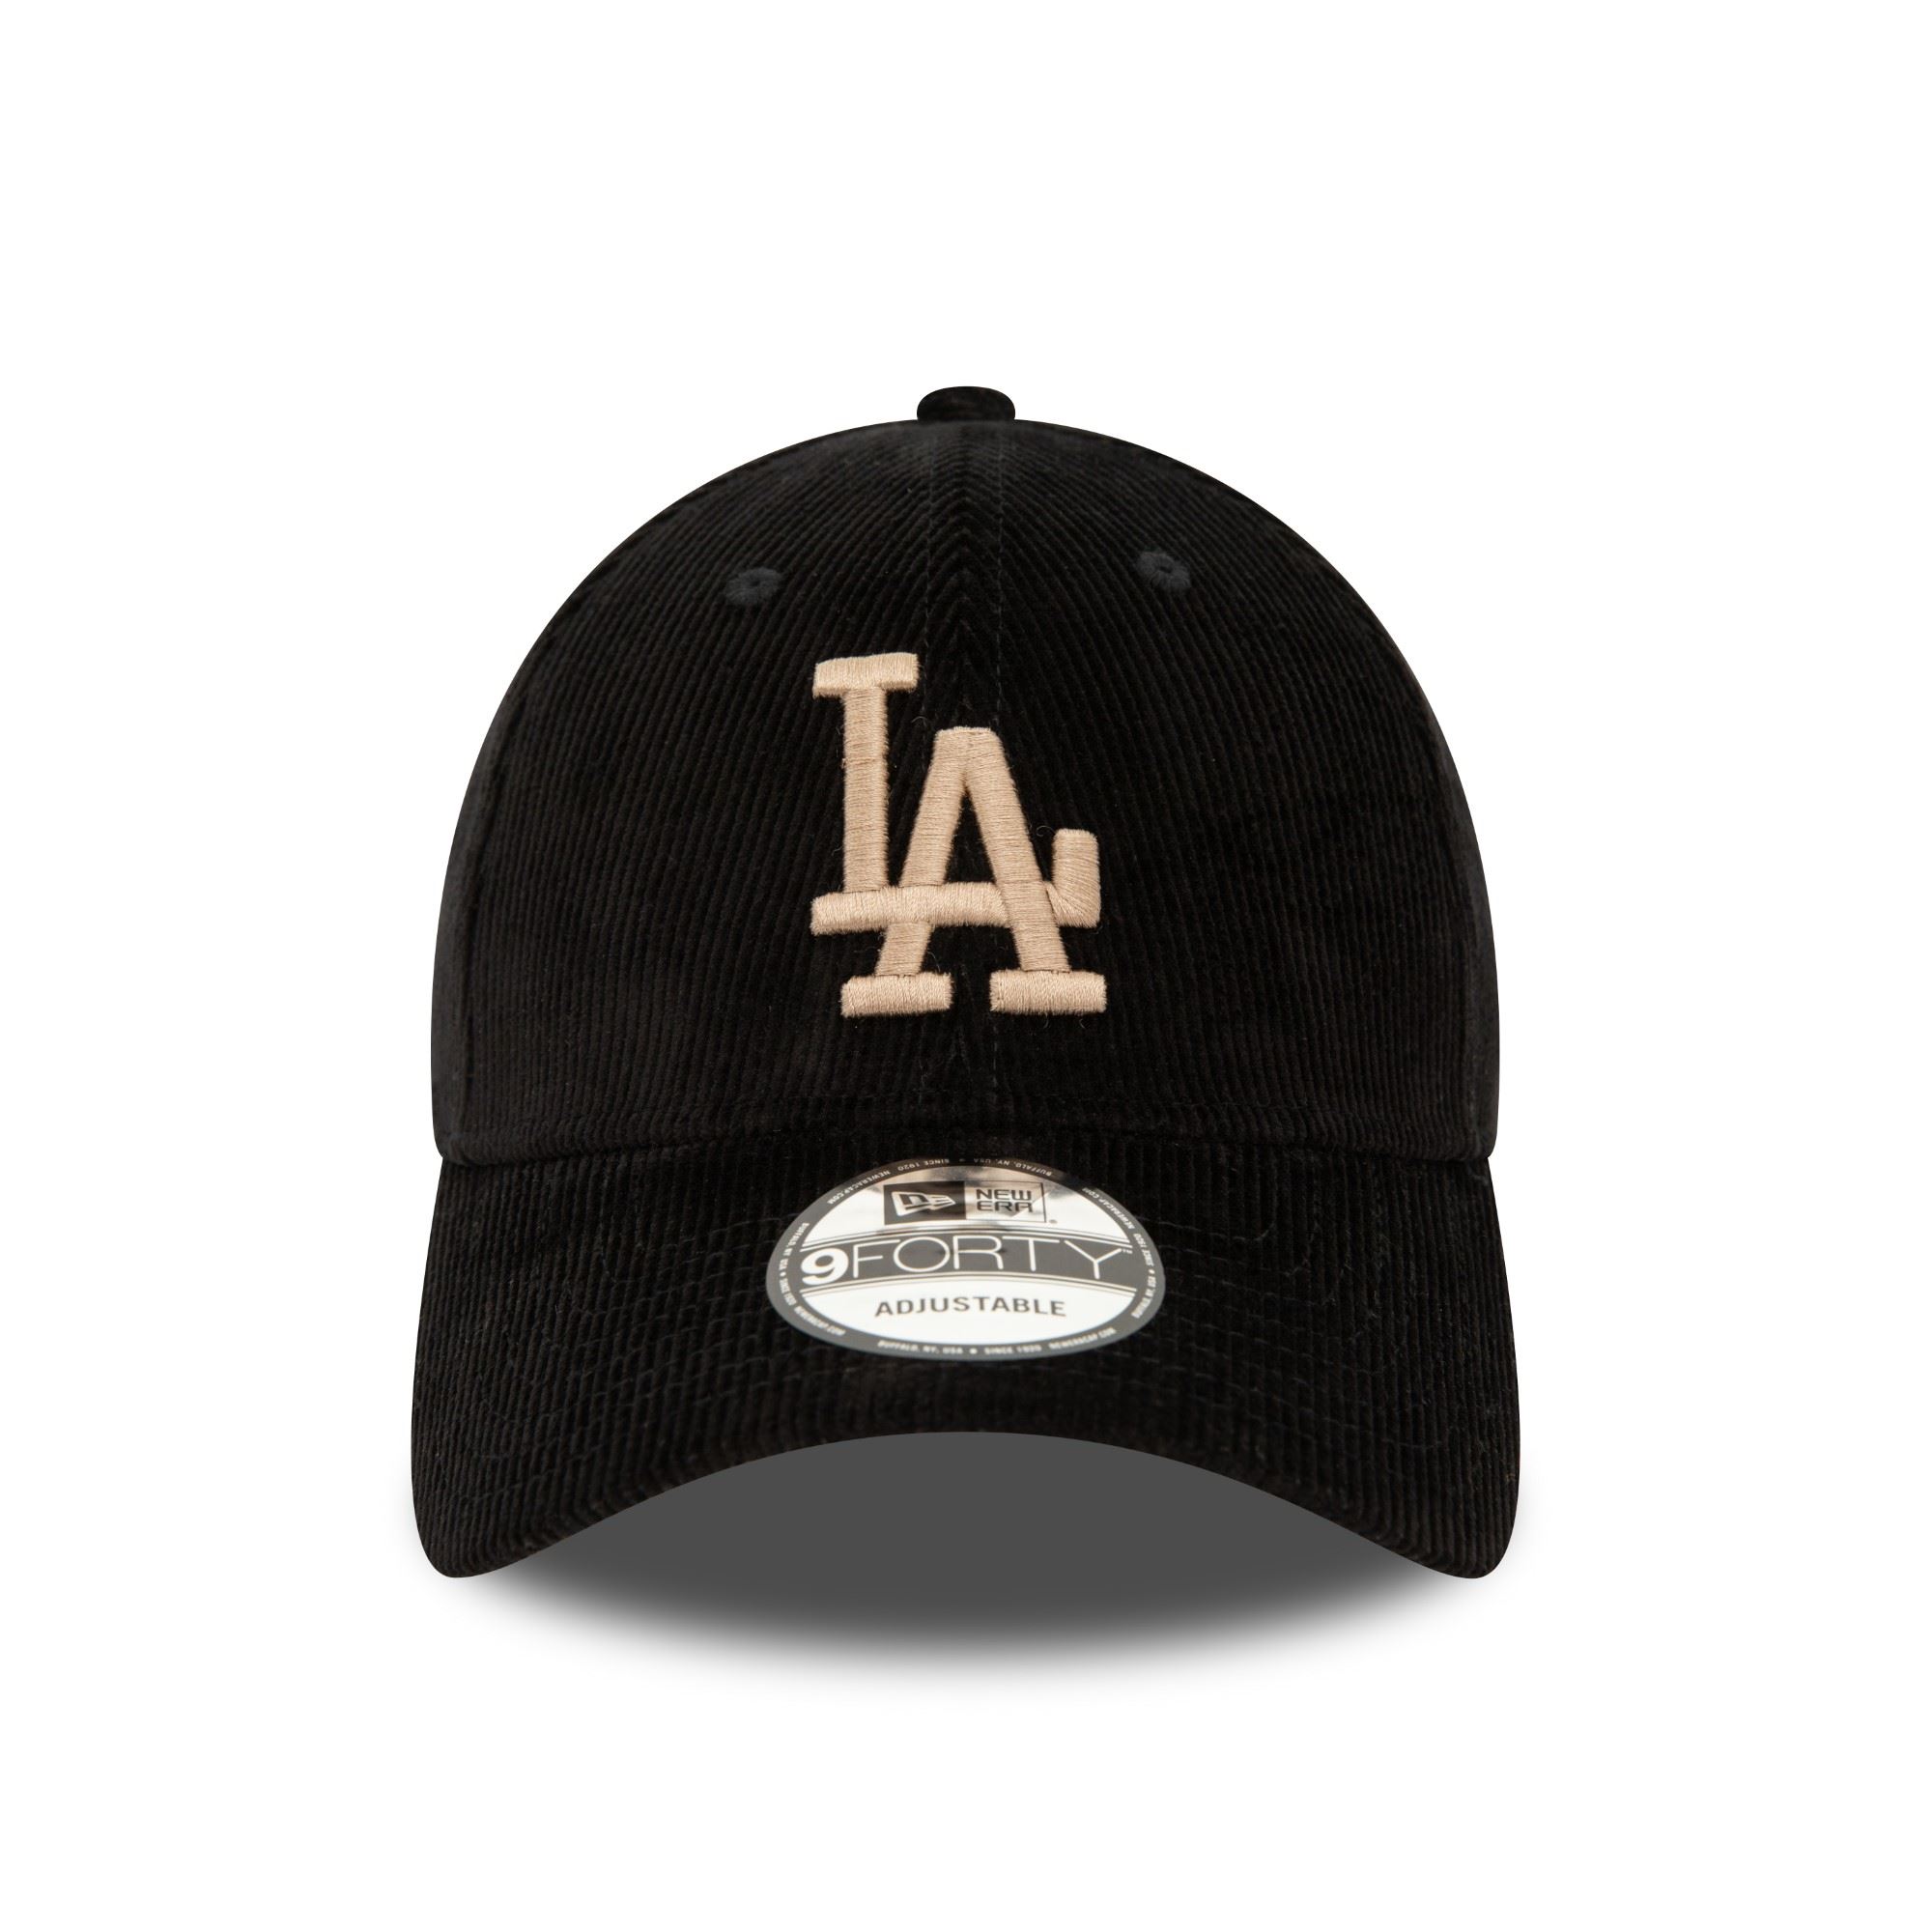 Los Angeles Dodgers MLB Cord Black 9Forty Adjustable Cap New Era